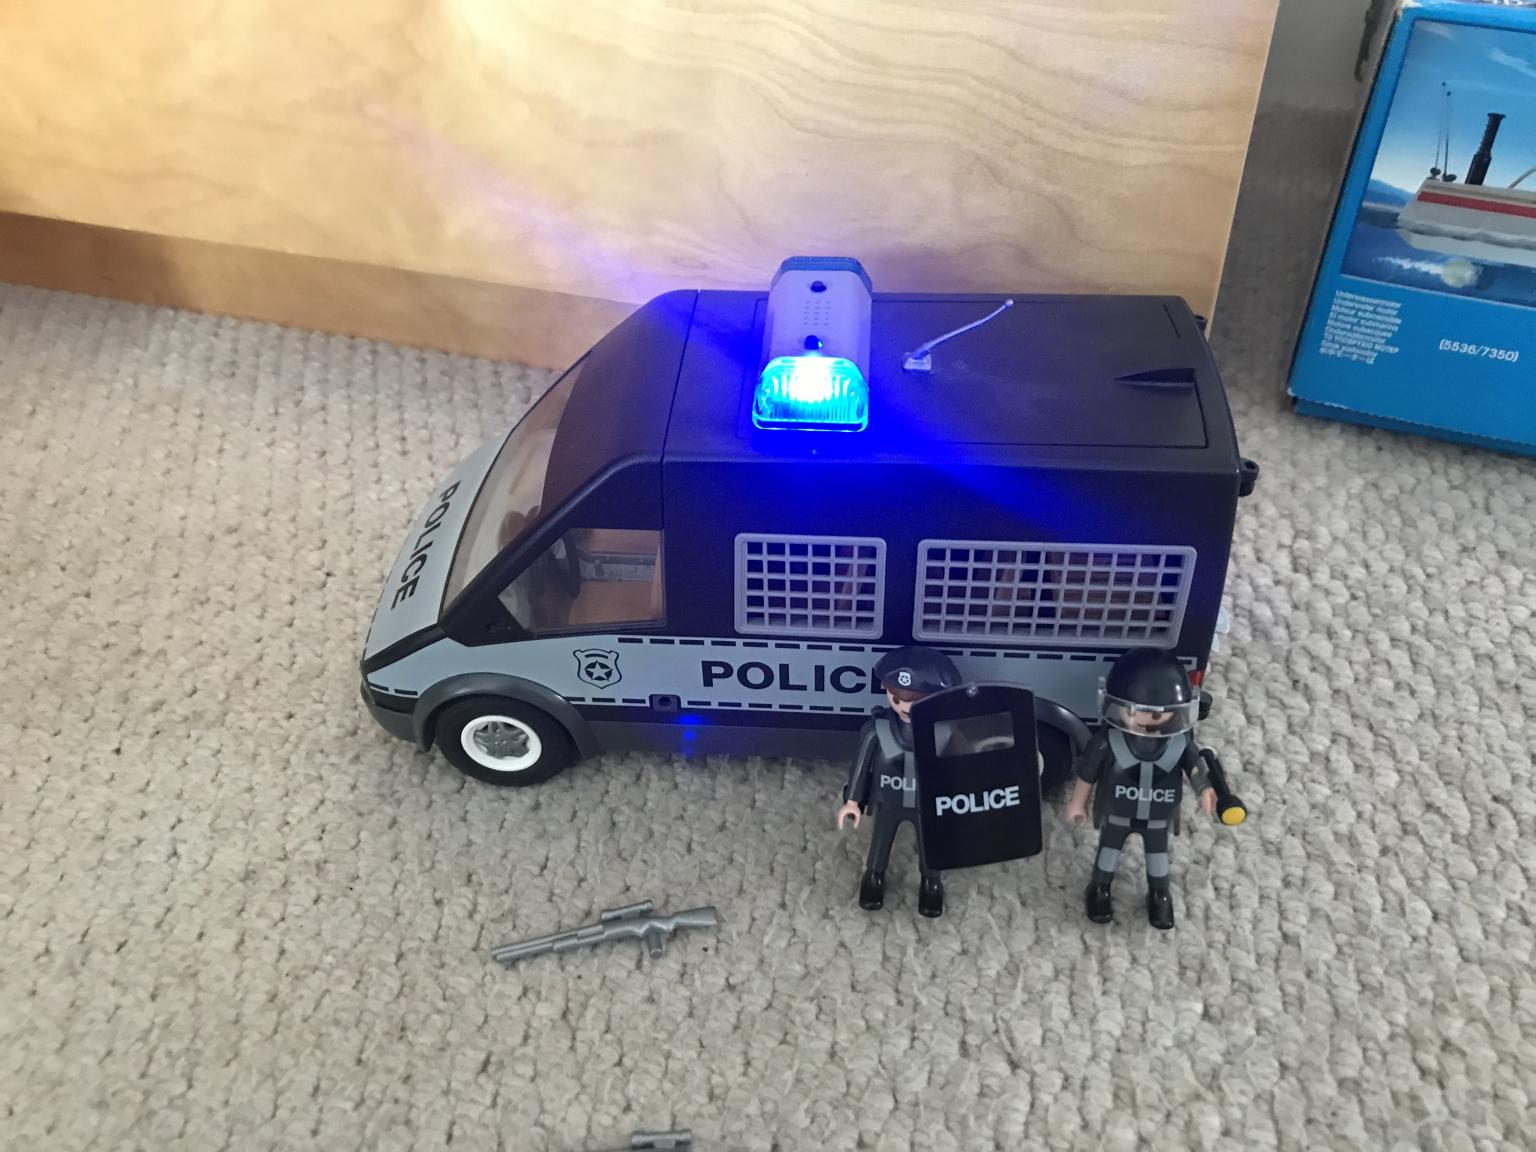 playmobil police van 6043